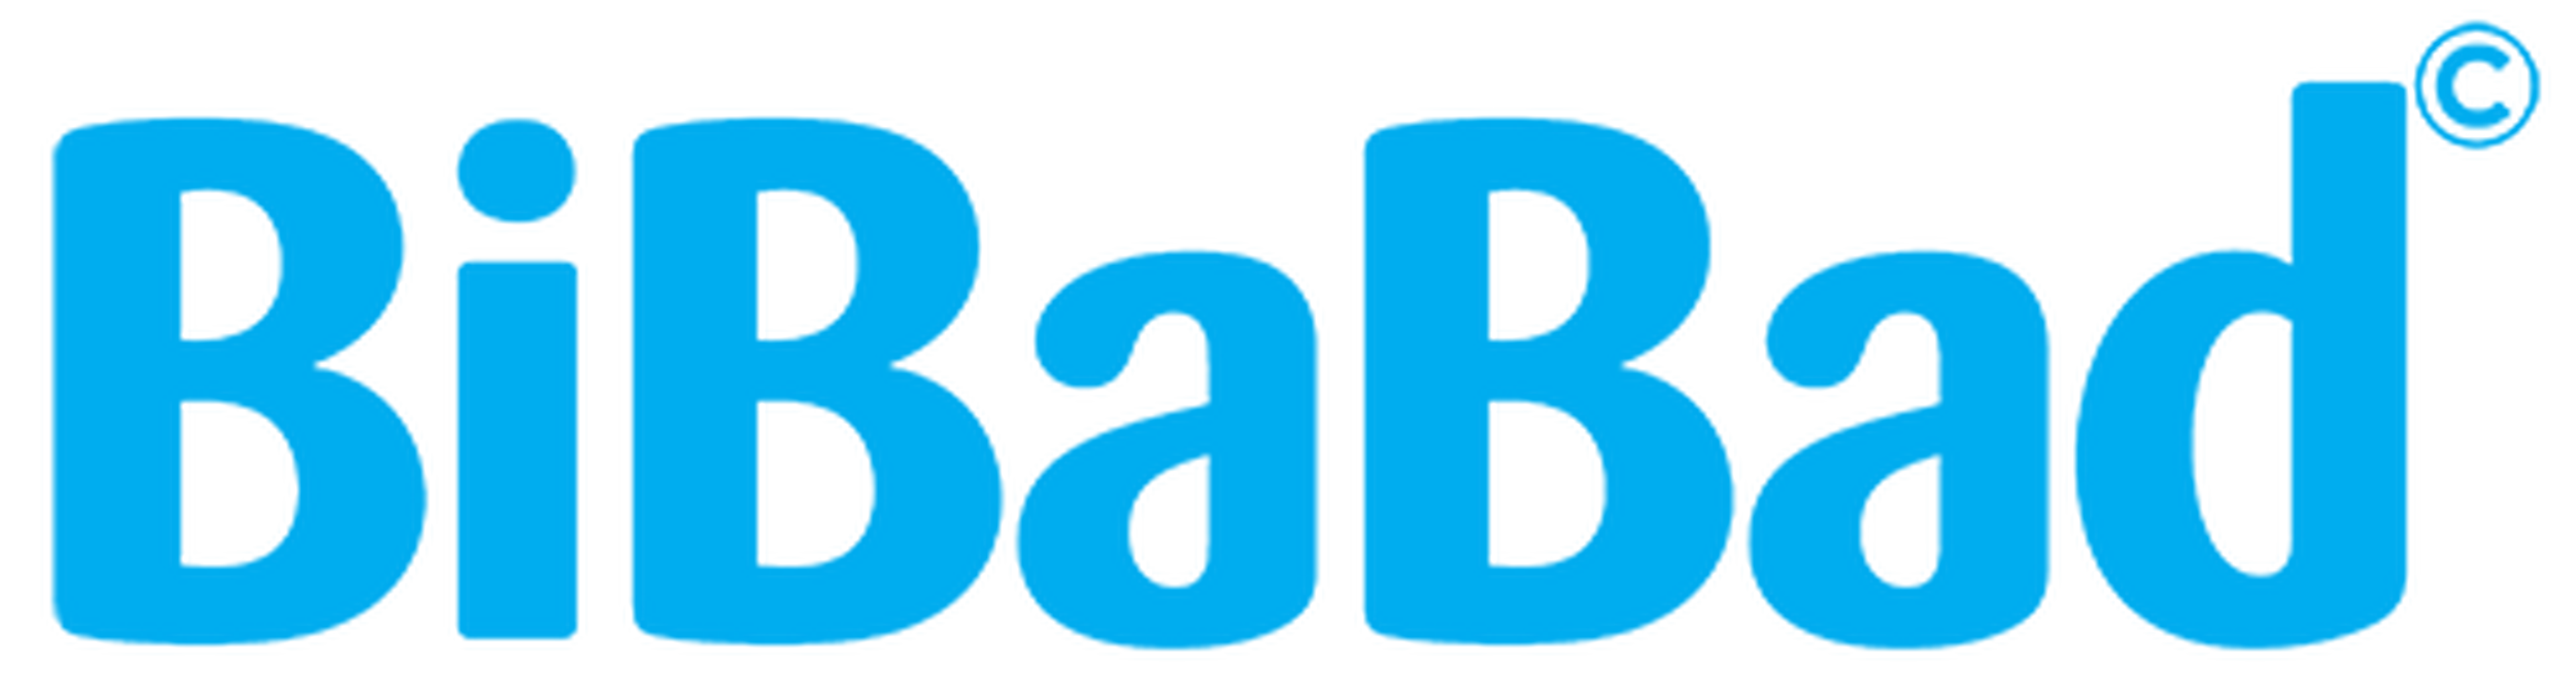 BiBaBad logotype